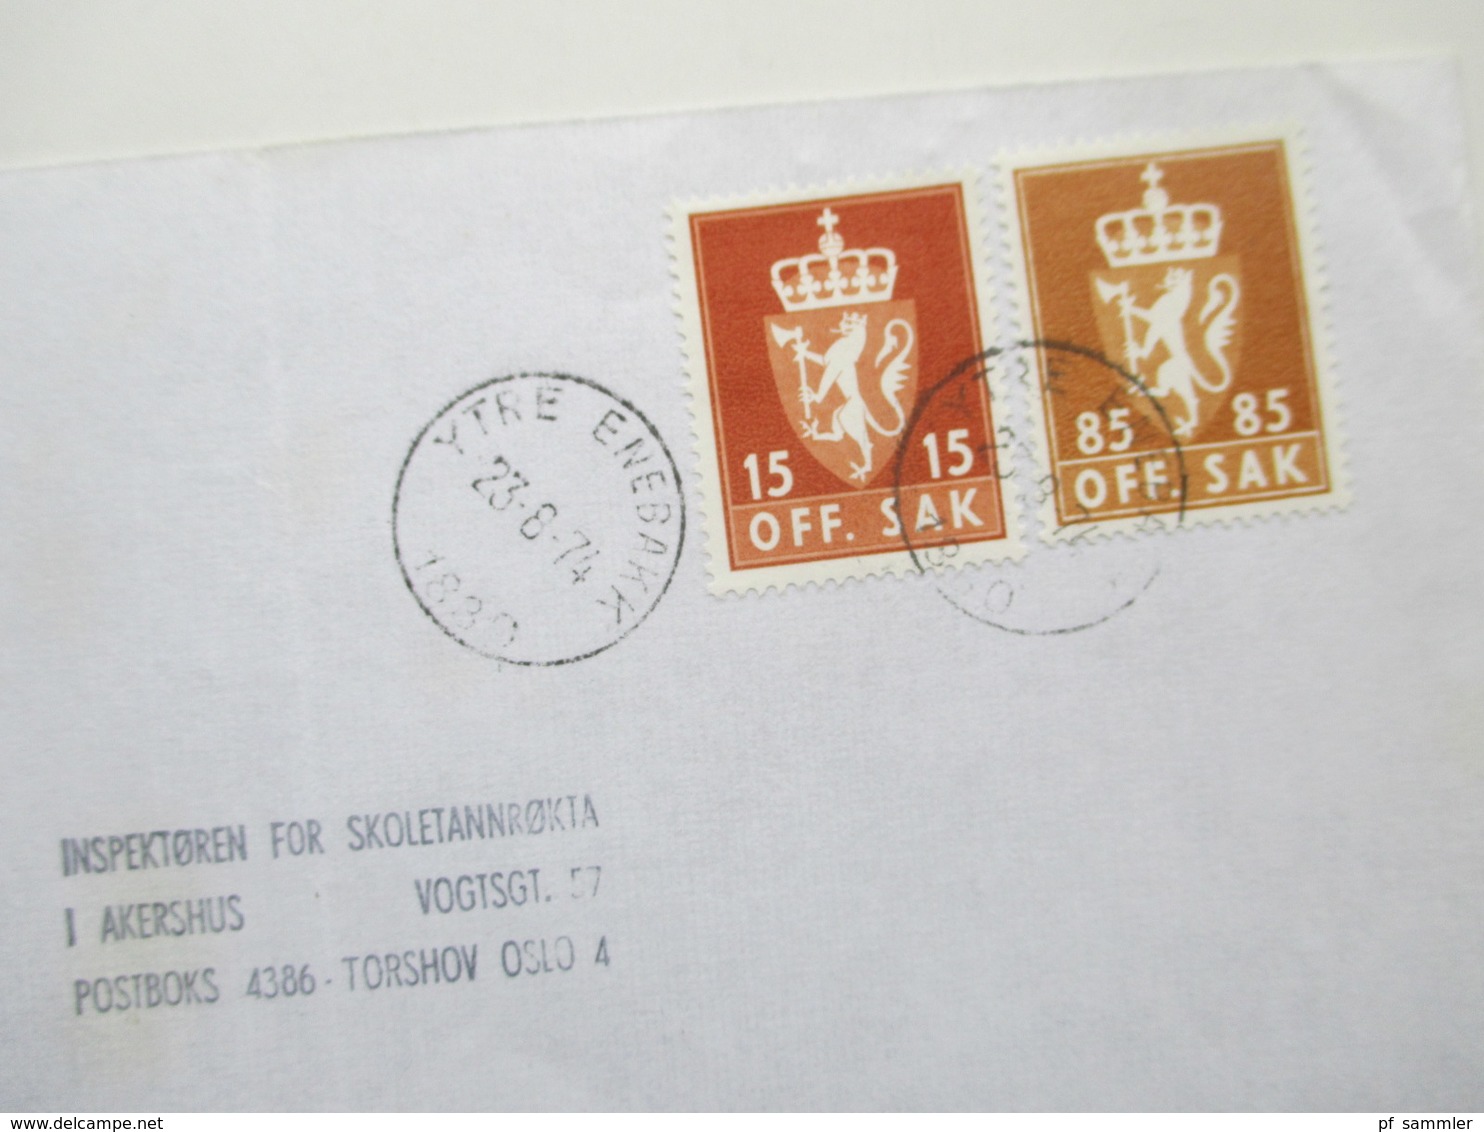 Norwegen 1972 Dienstmarken 5 Belege Inspektoren For Skoletannrokta Akershus. Off. Sak - Dienstzegels